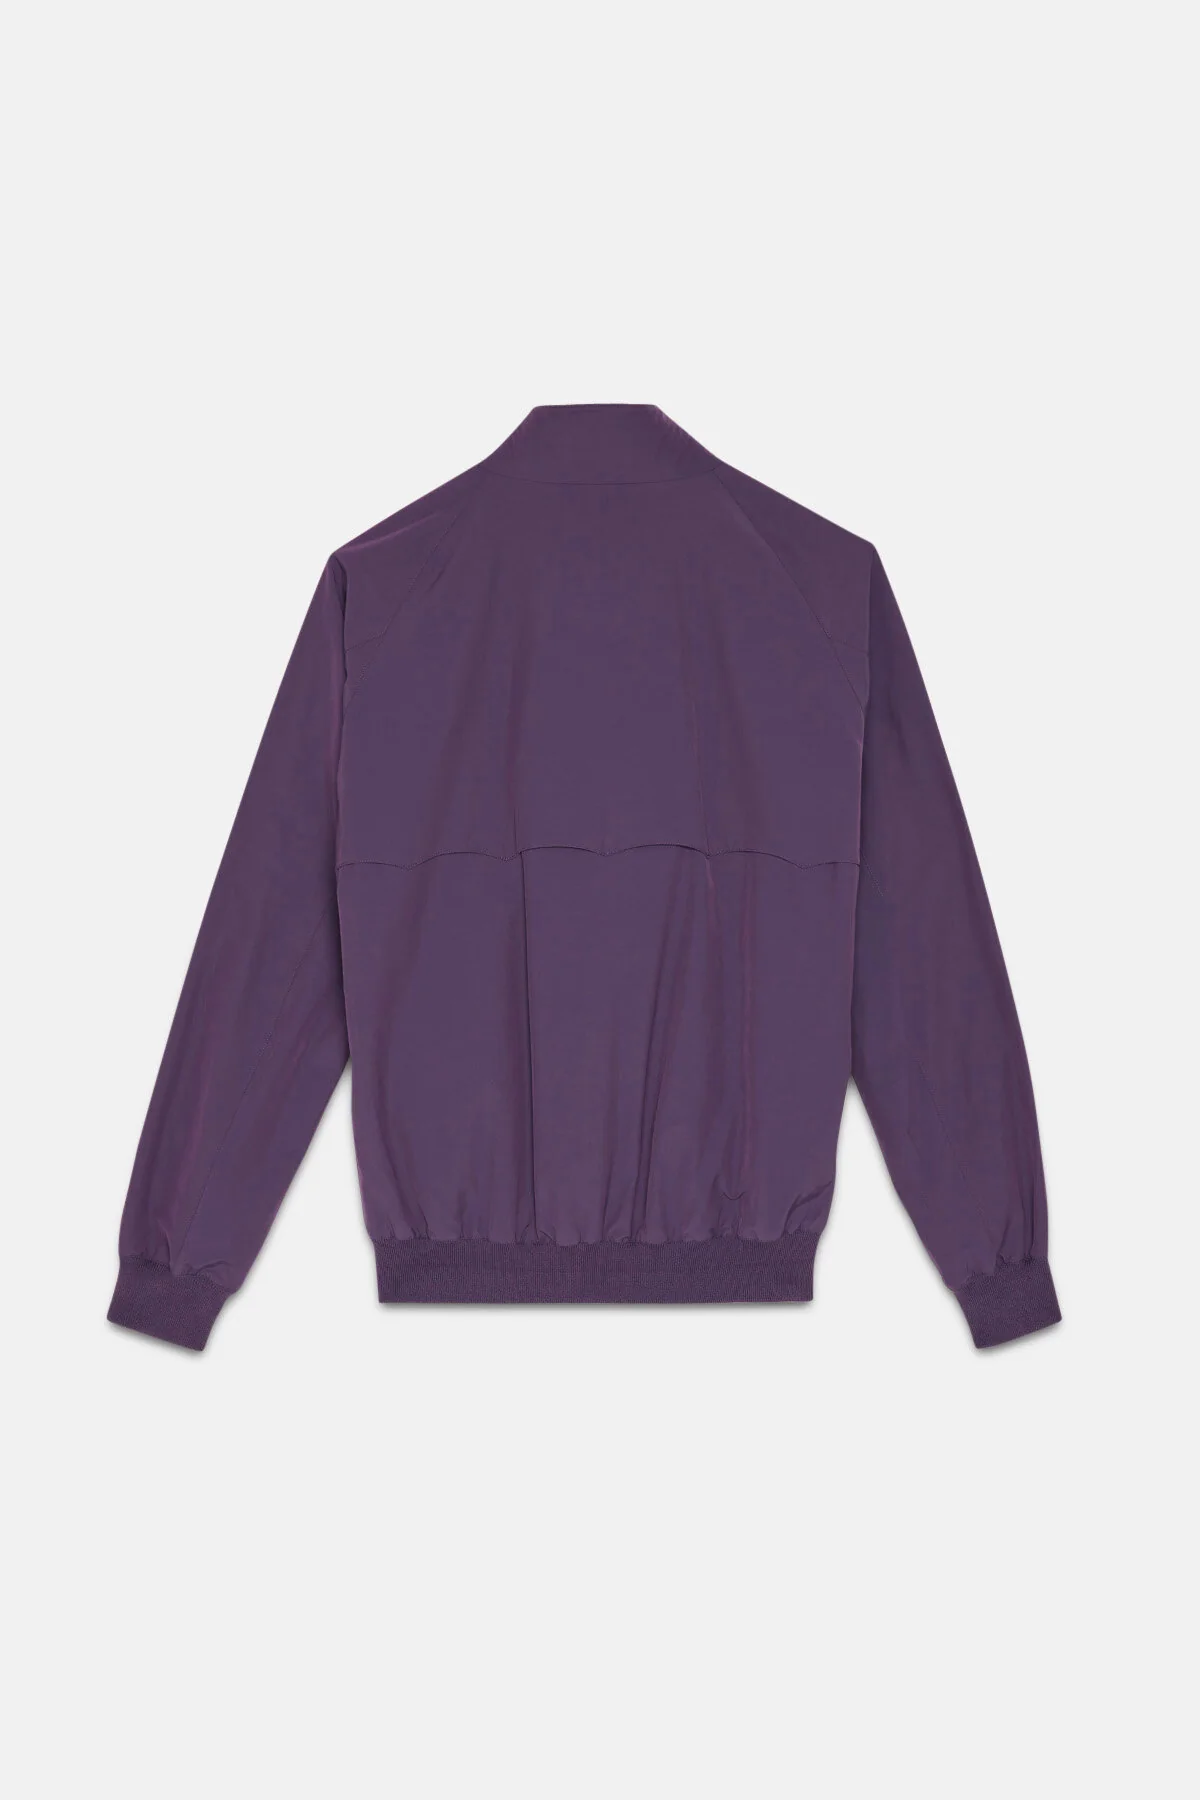 Baracuta G9 Harrington Jacket in Purple plum